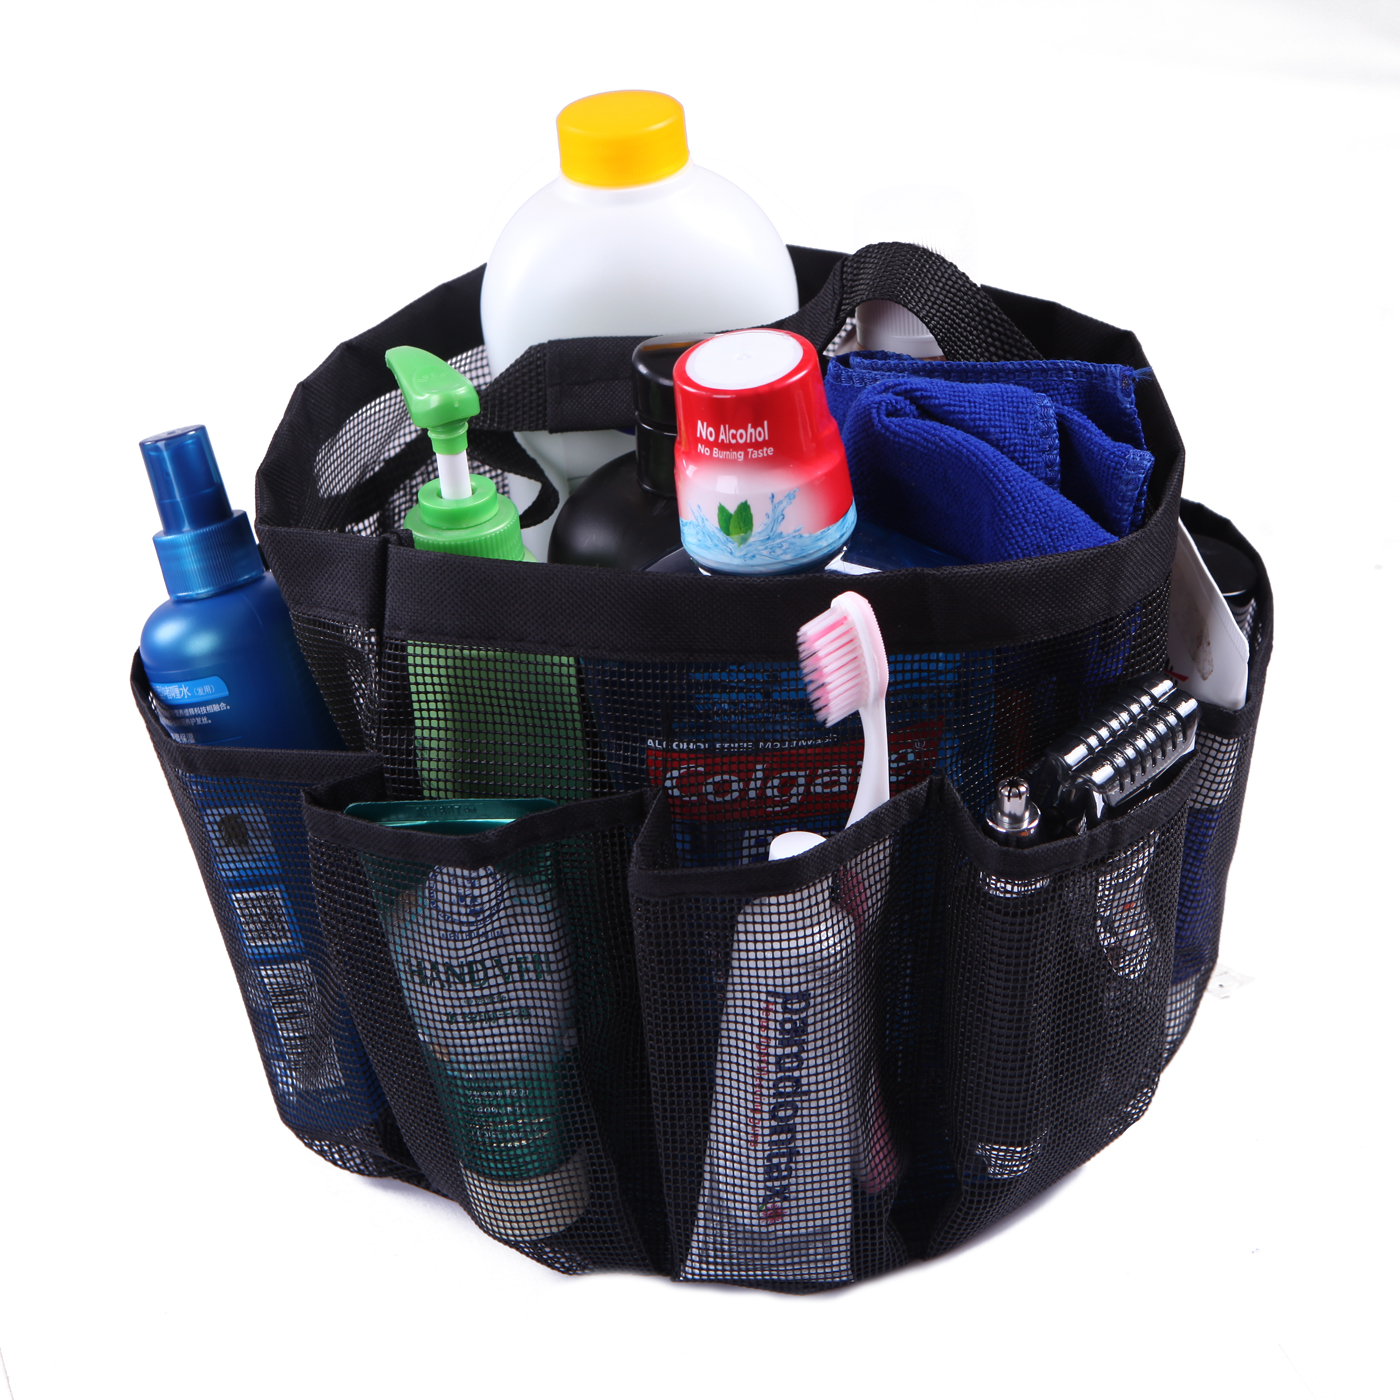 HDE Mesh Shower Bag Caddy Bath Organizer Black - image 3 of 4